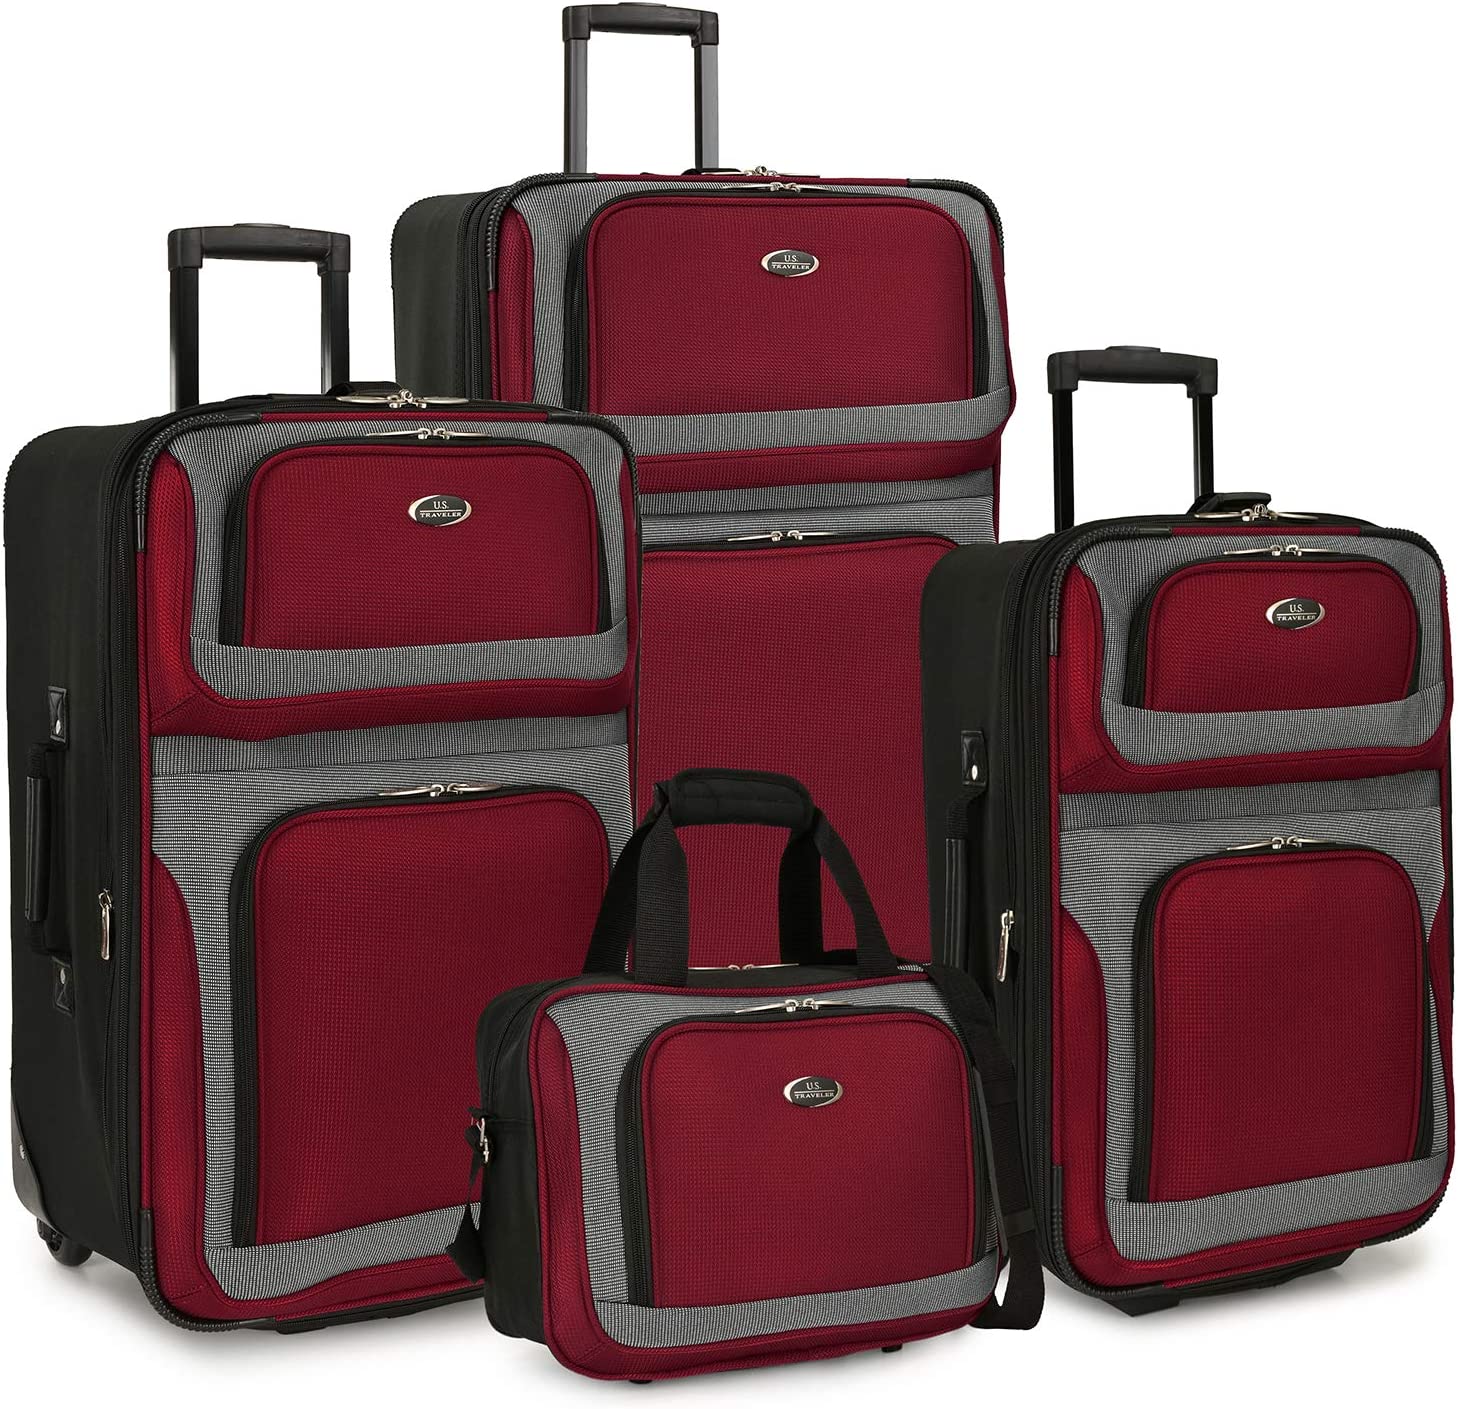 U.S Traveler New Yorker Adjustable Luggage Set, 4-Piece